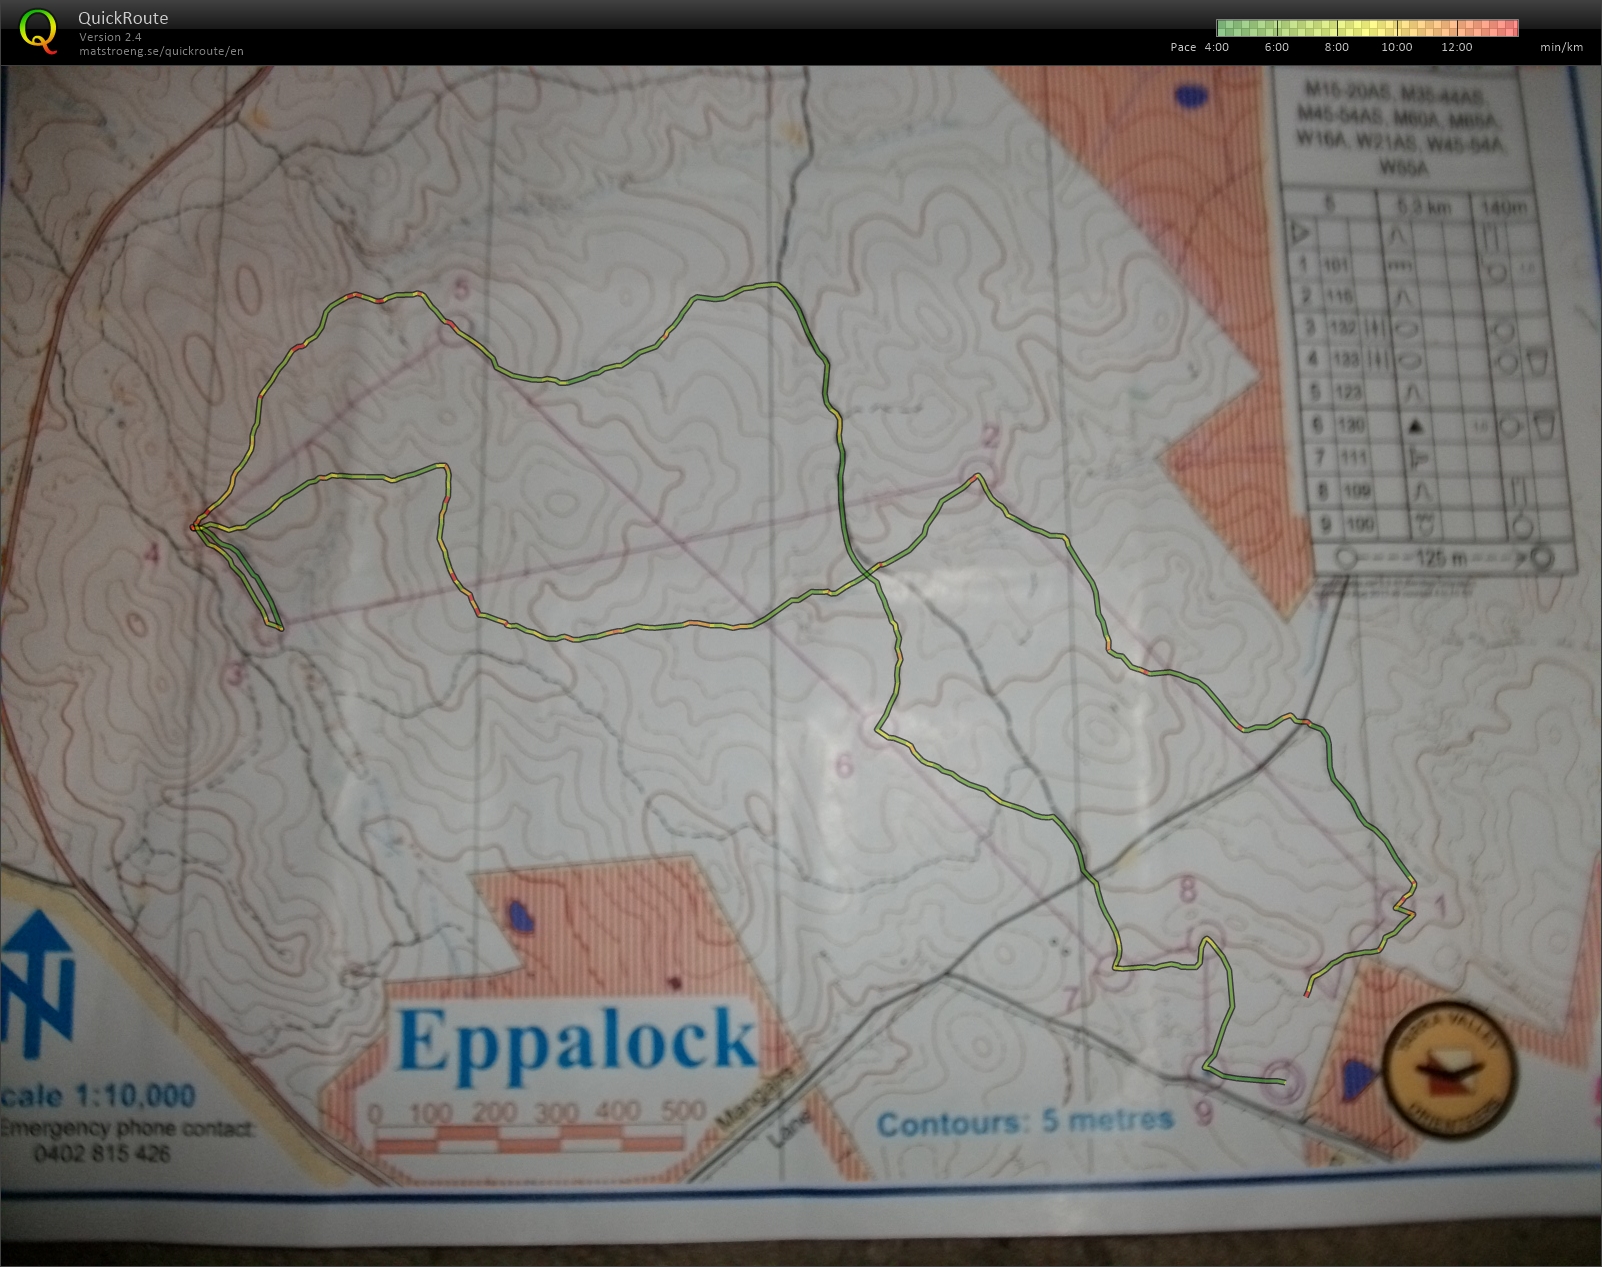 State Series #7 Eppalock (17/08/2013)